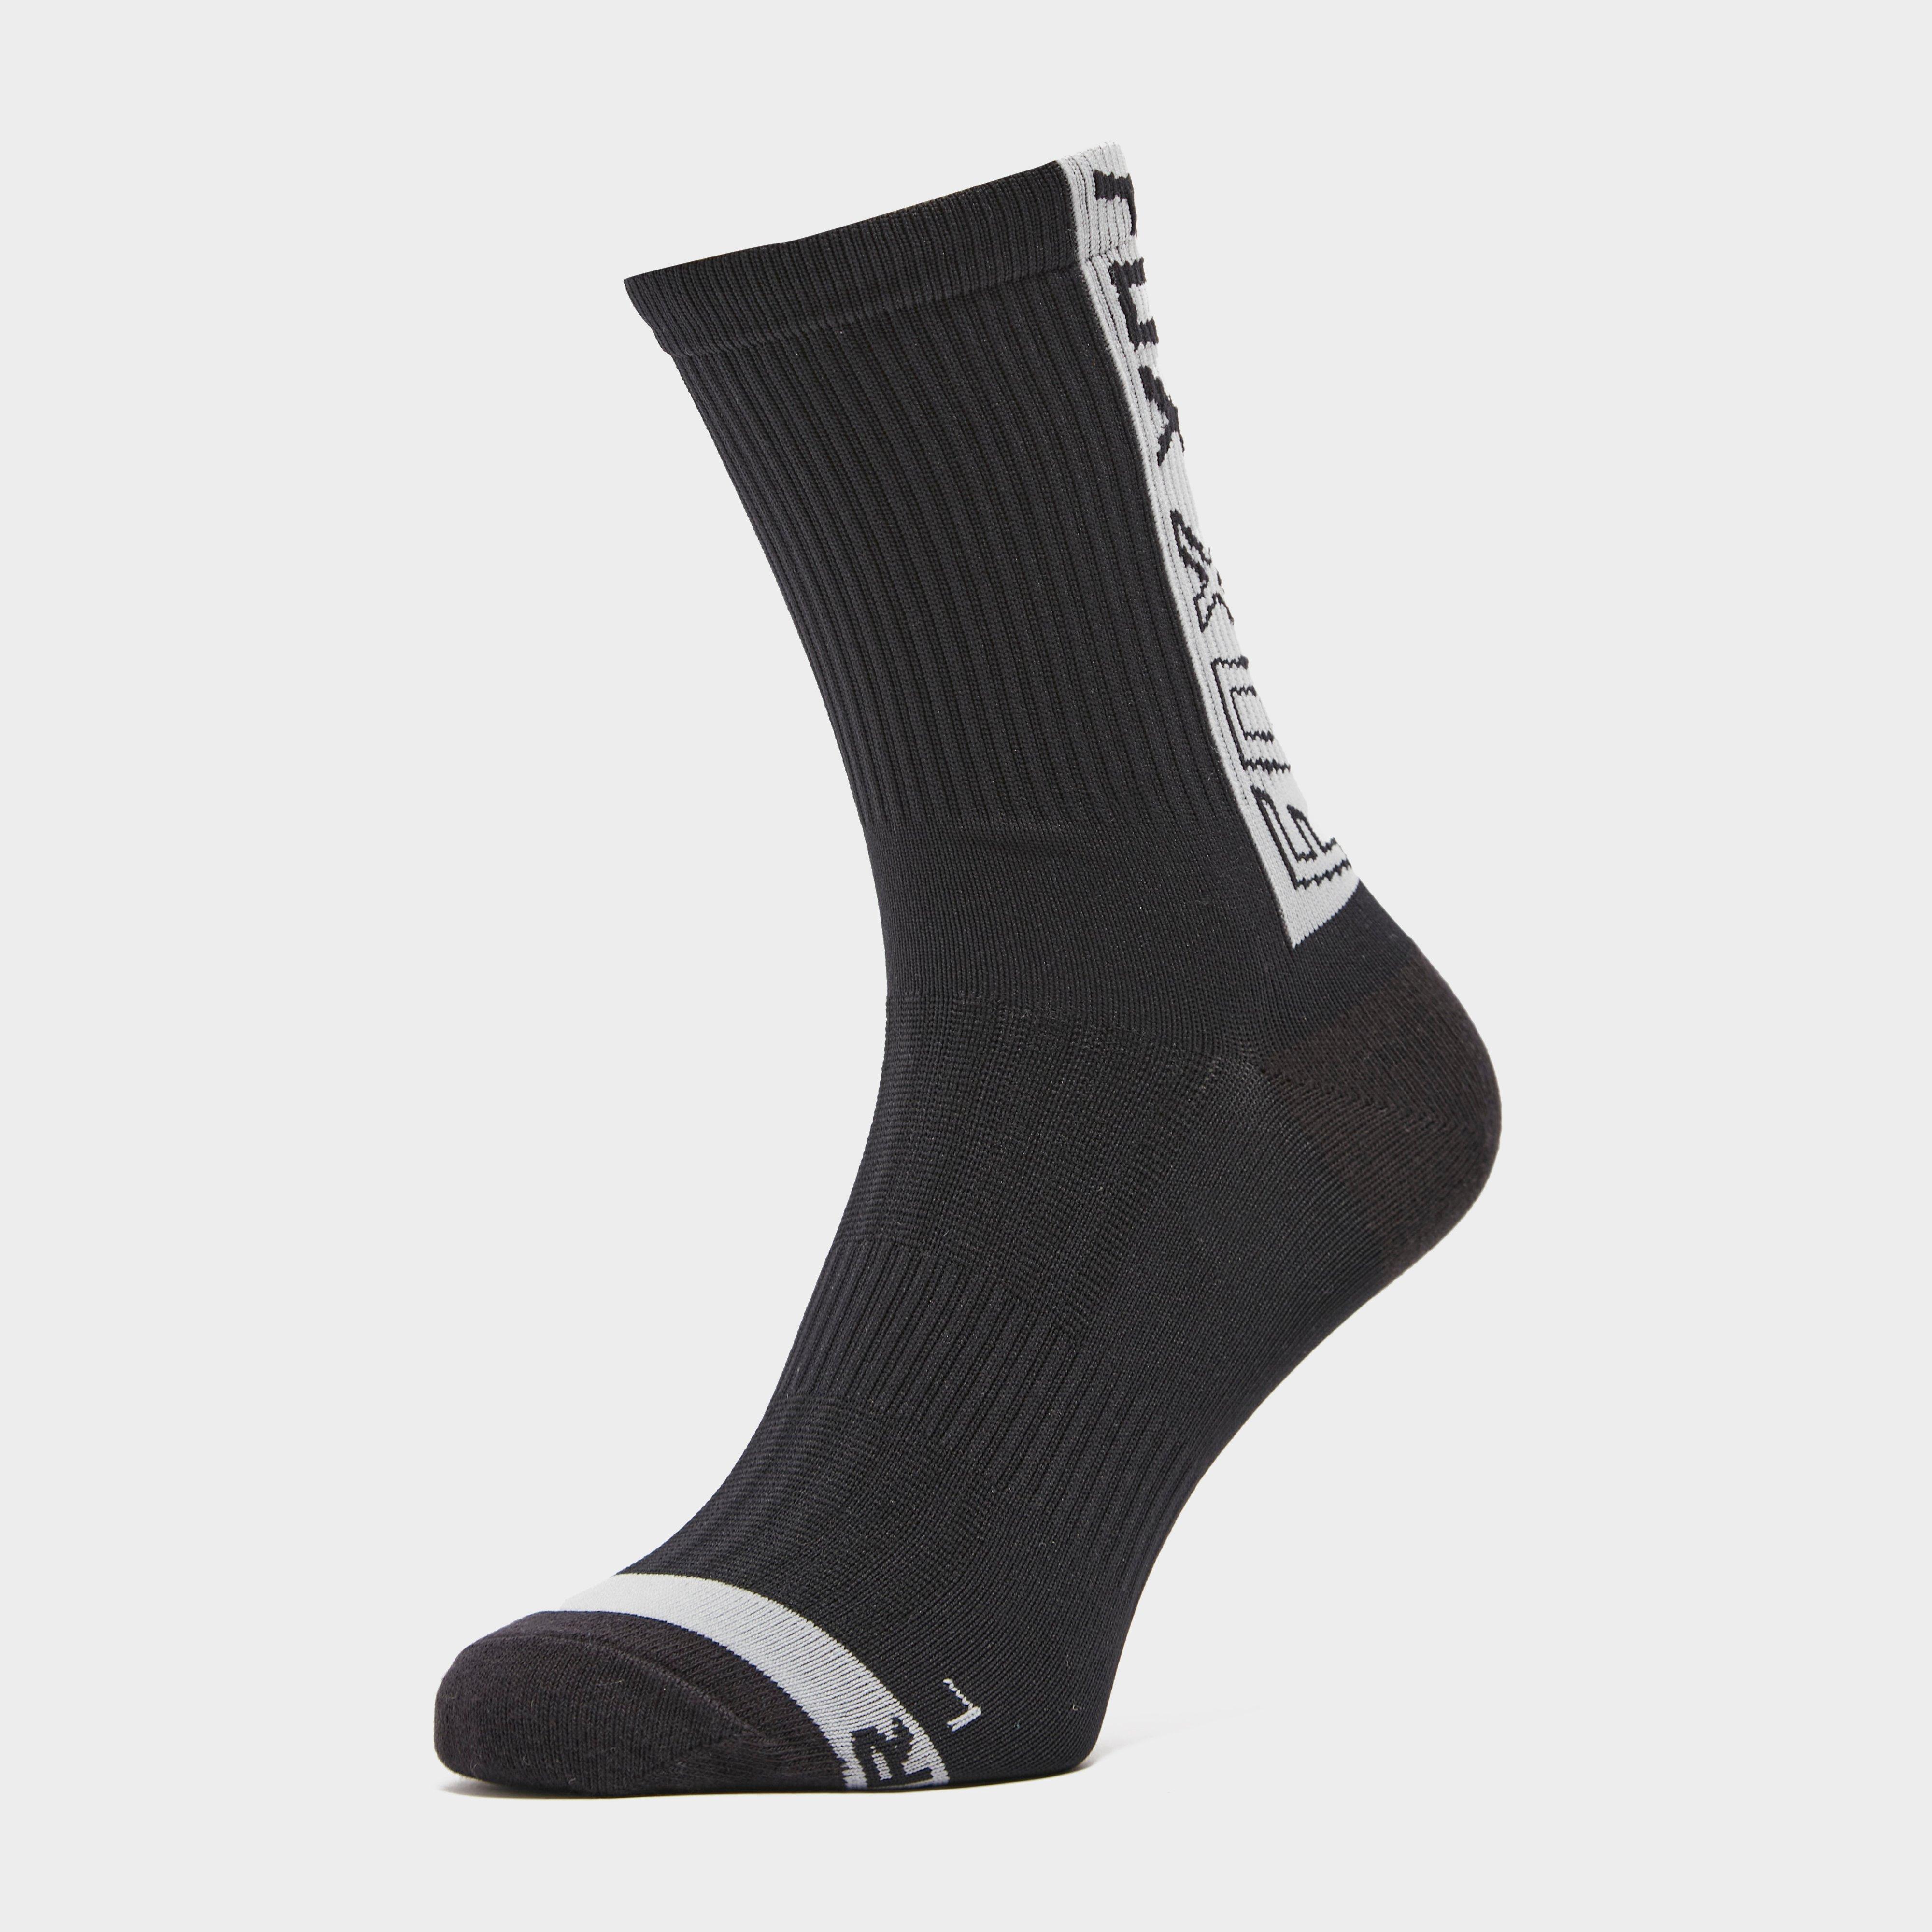 Image of Fox Cycling Men's 6" Ranger Socks - Black/Black, BLACK/BLACK